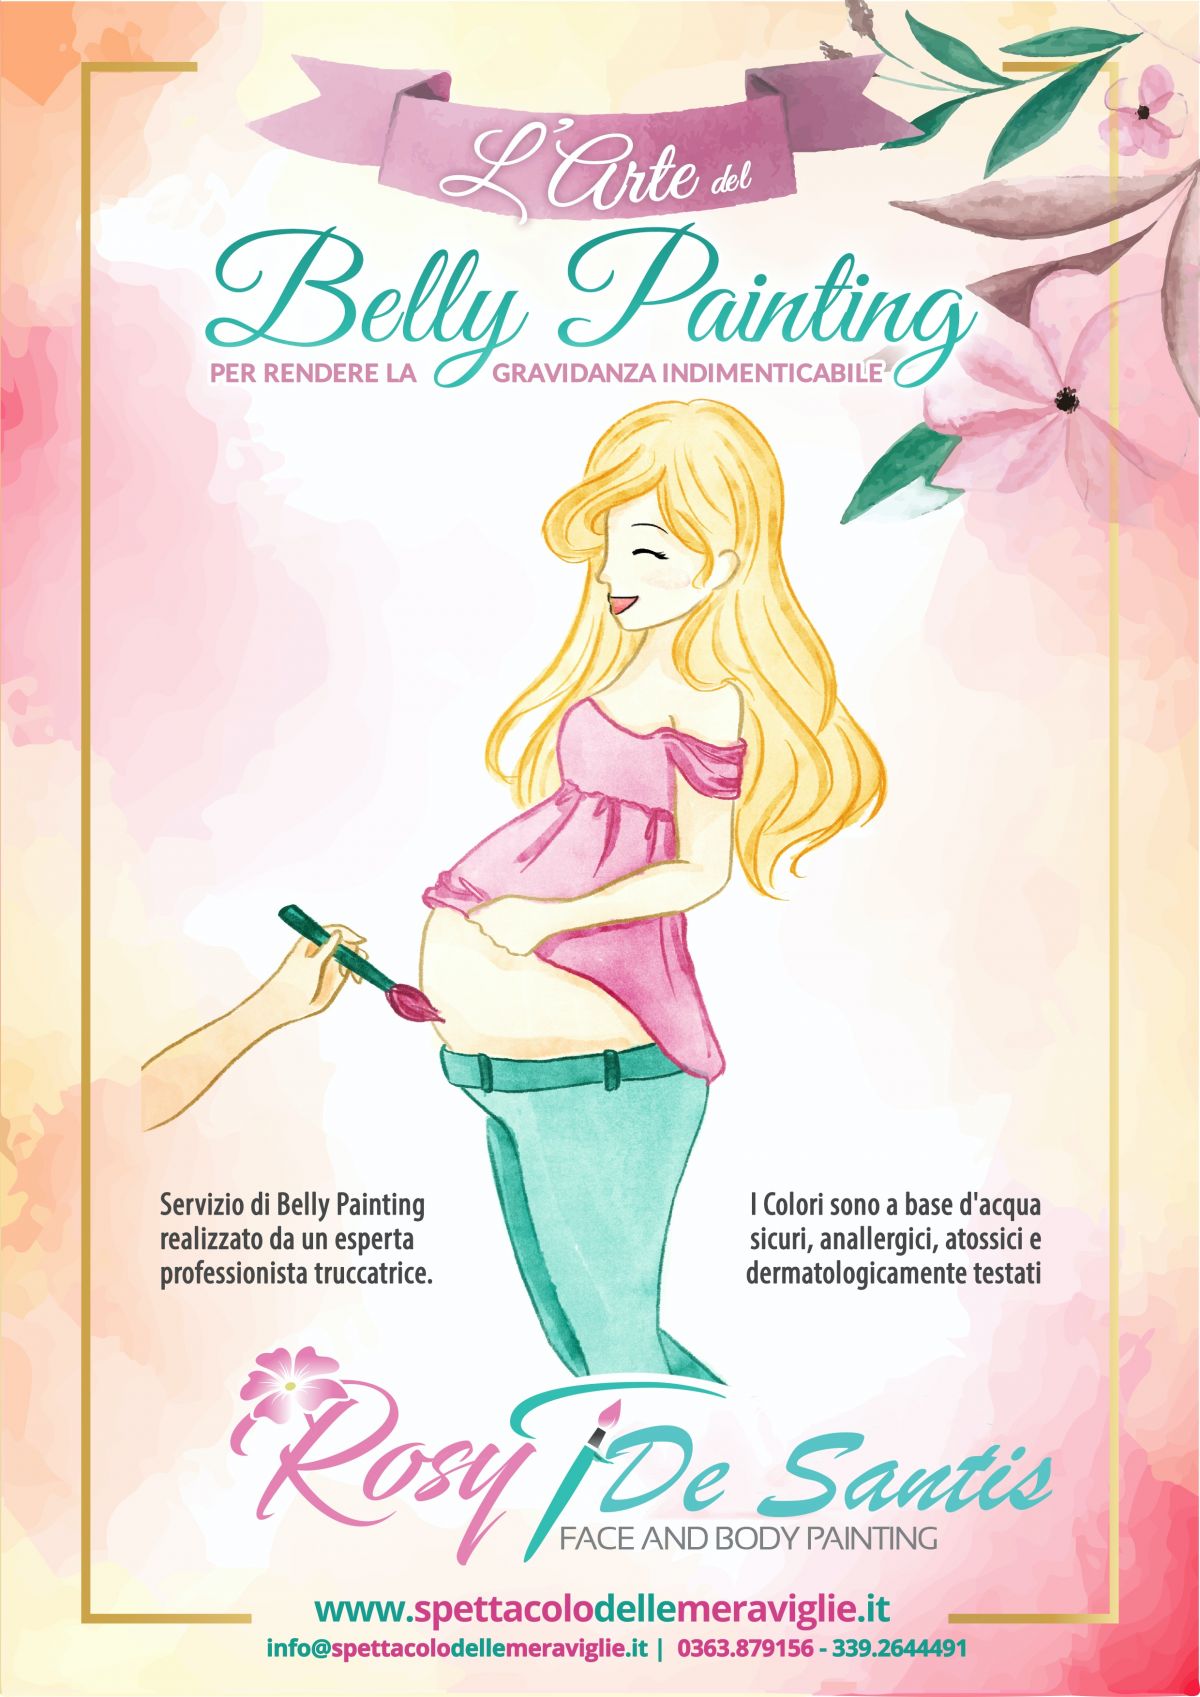 Body painting in gravidanza